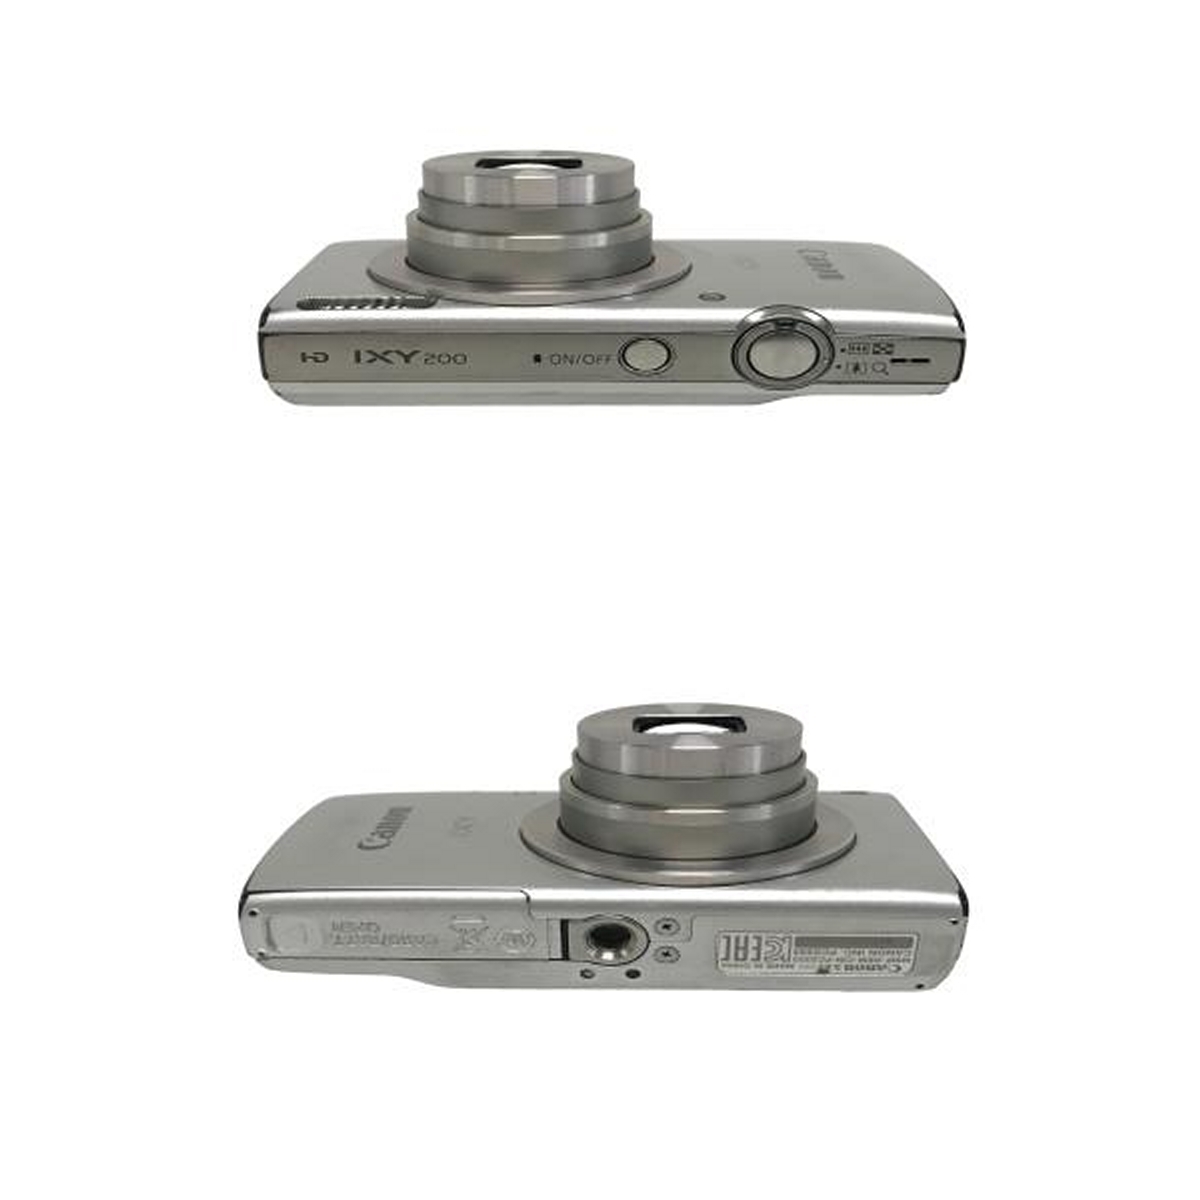 [ гарантия работы ]Canon IXY 200 компактный цифровой фотоаппарат темно синий teji Canon хобби фотосъемка камера б/у F8952447